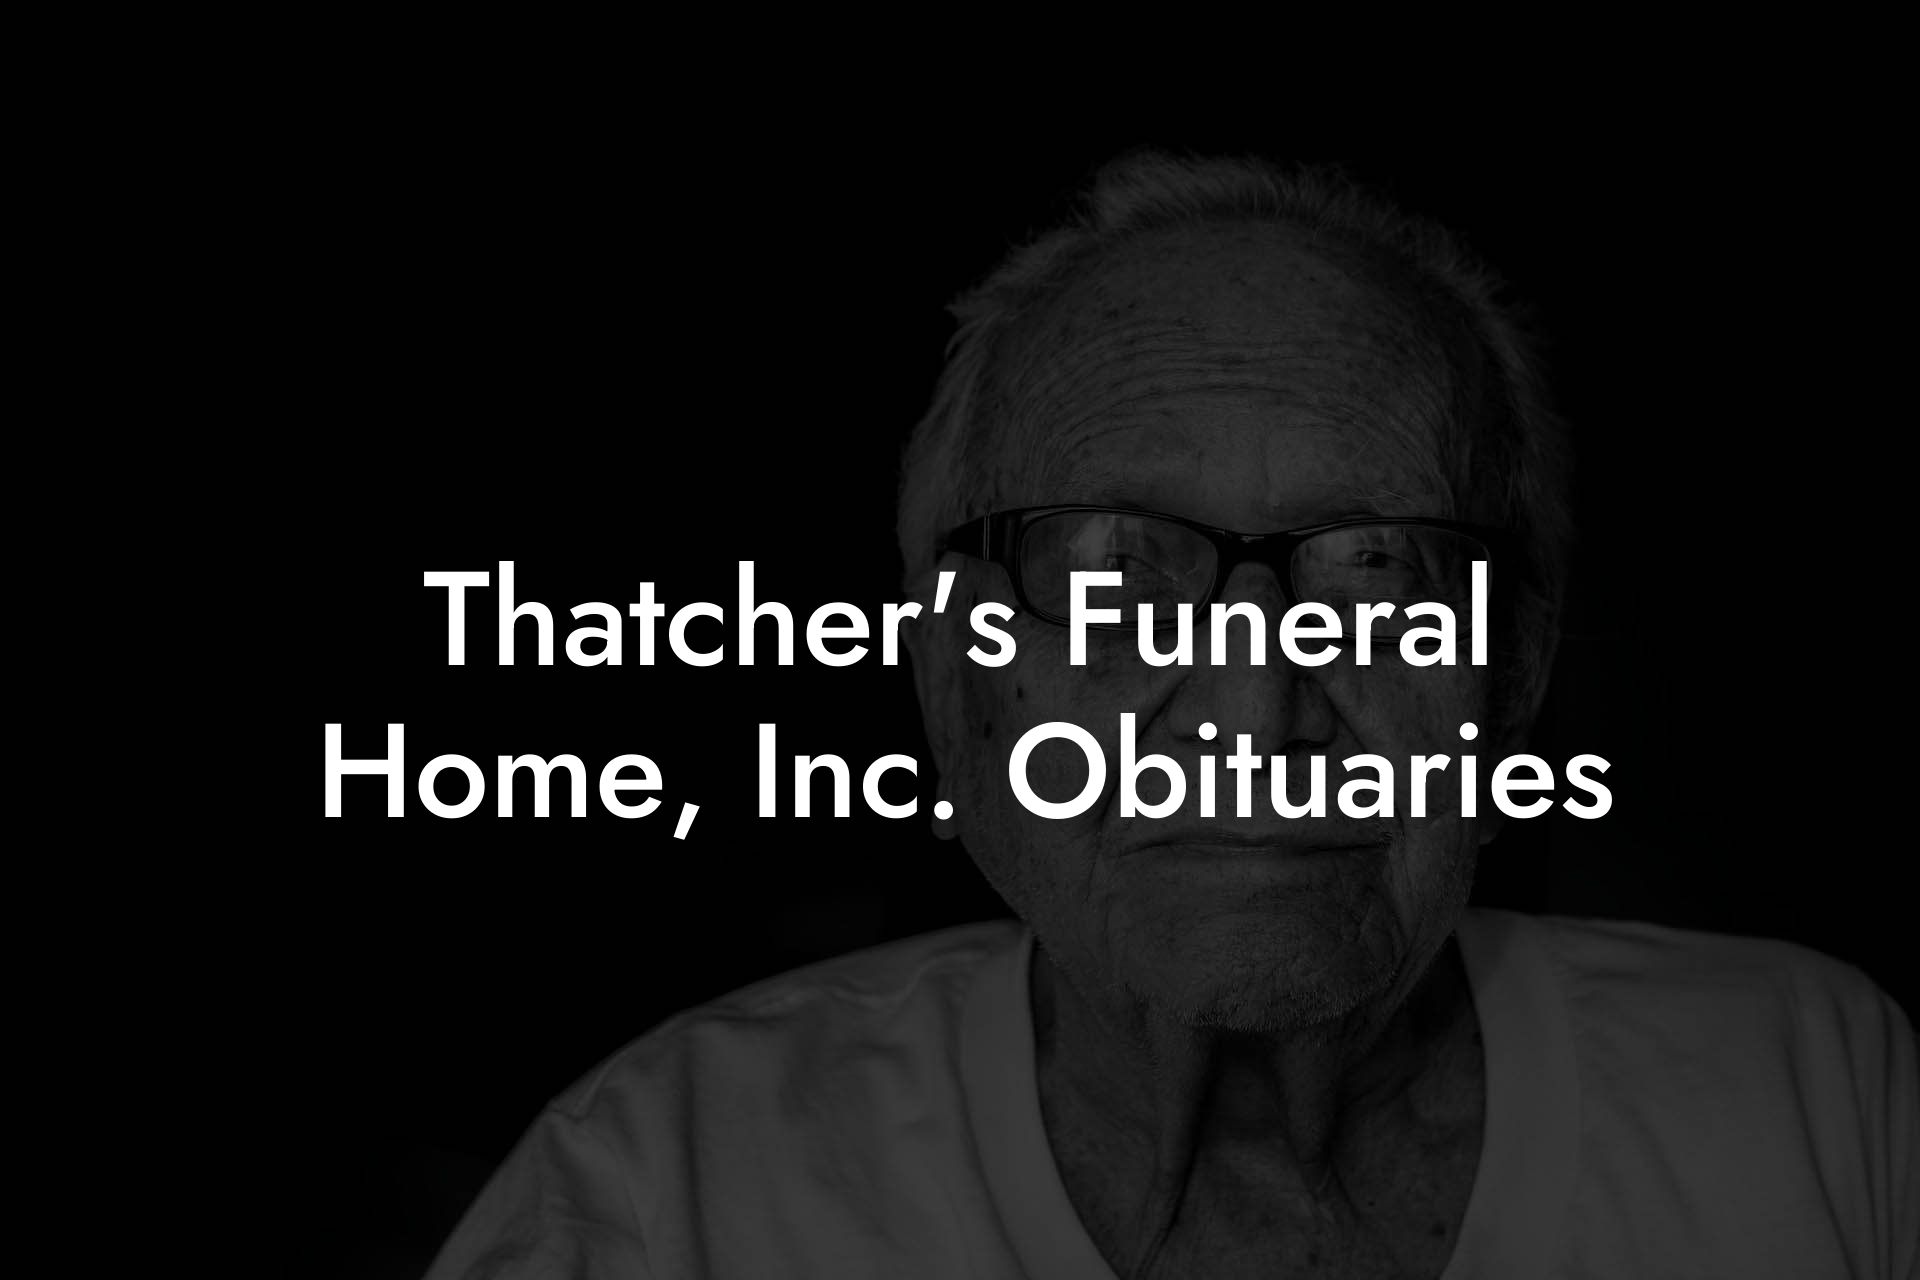 Thatcher's Funeral Home, Inc. Obituaries